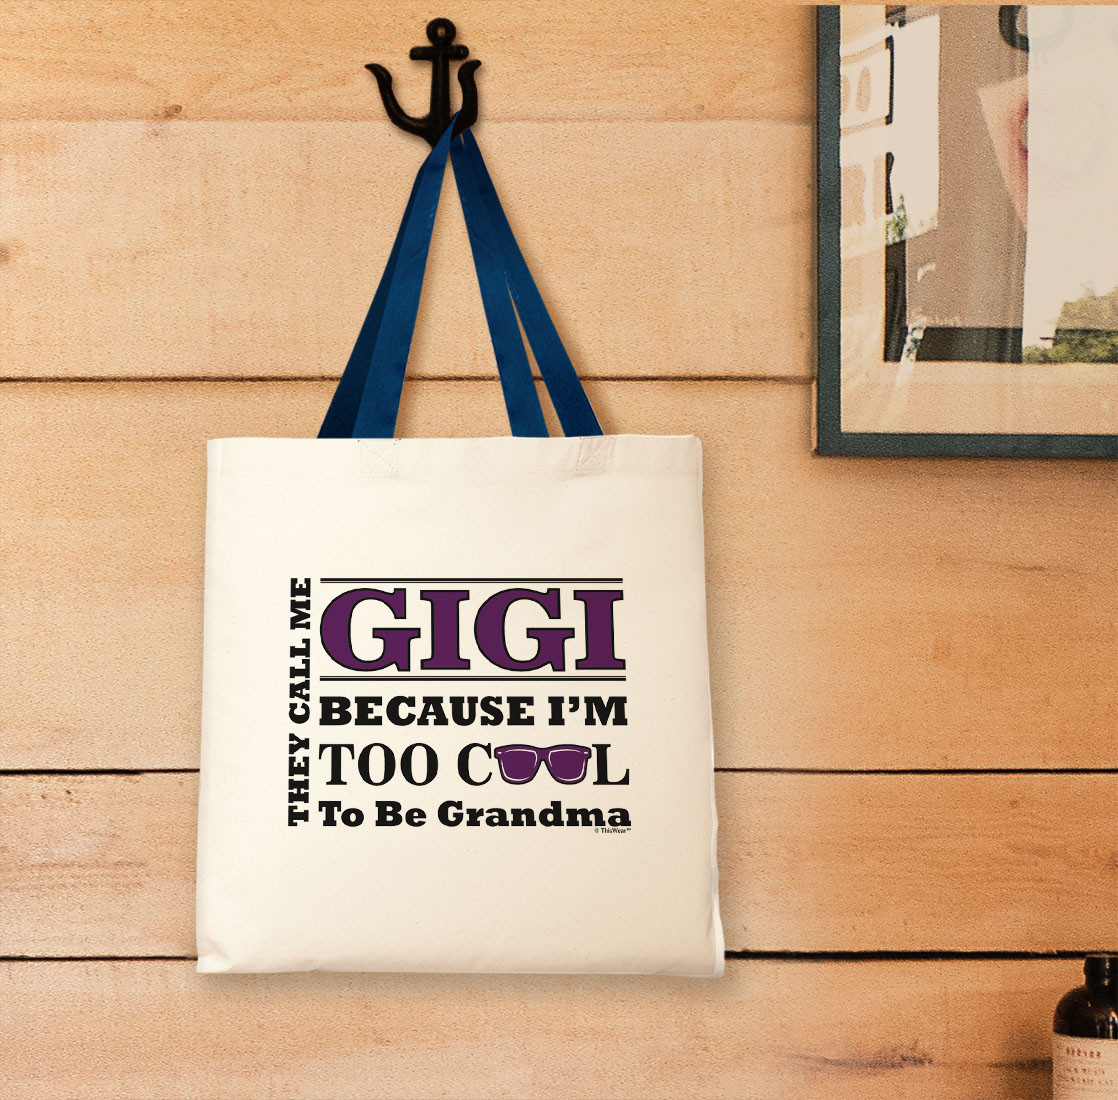 Grandmother Gift Ideas
 New Grandma Gifts Gigi Too Cool to Be a Grandma Gift Ideas